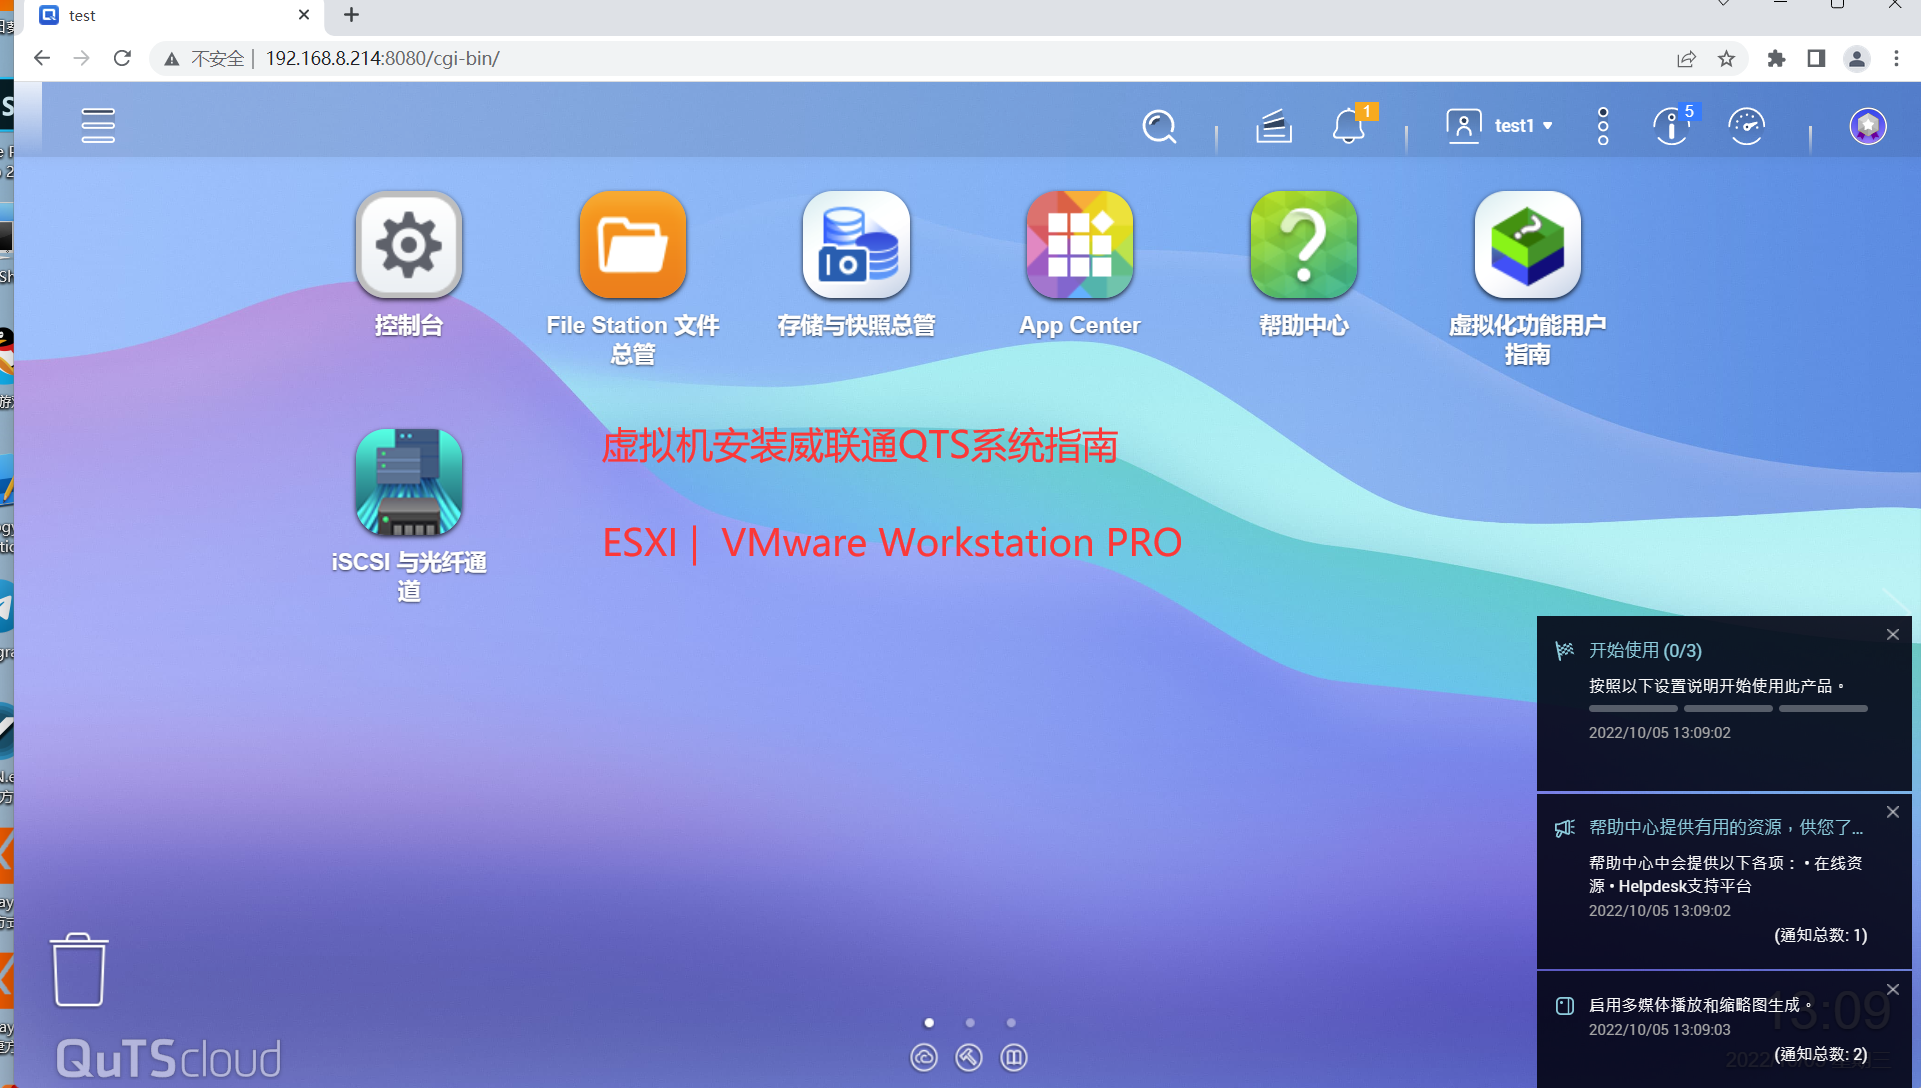 虚拟机安装威联通QTS系统指南 ESXI |  VMware Workstation PRO